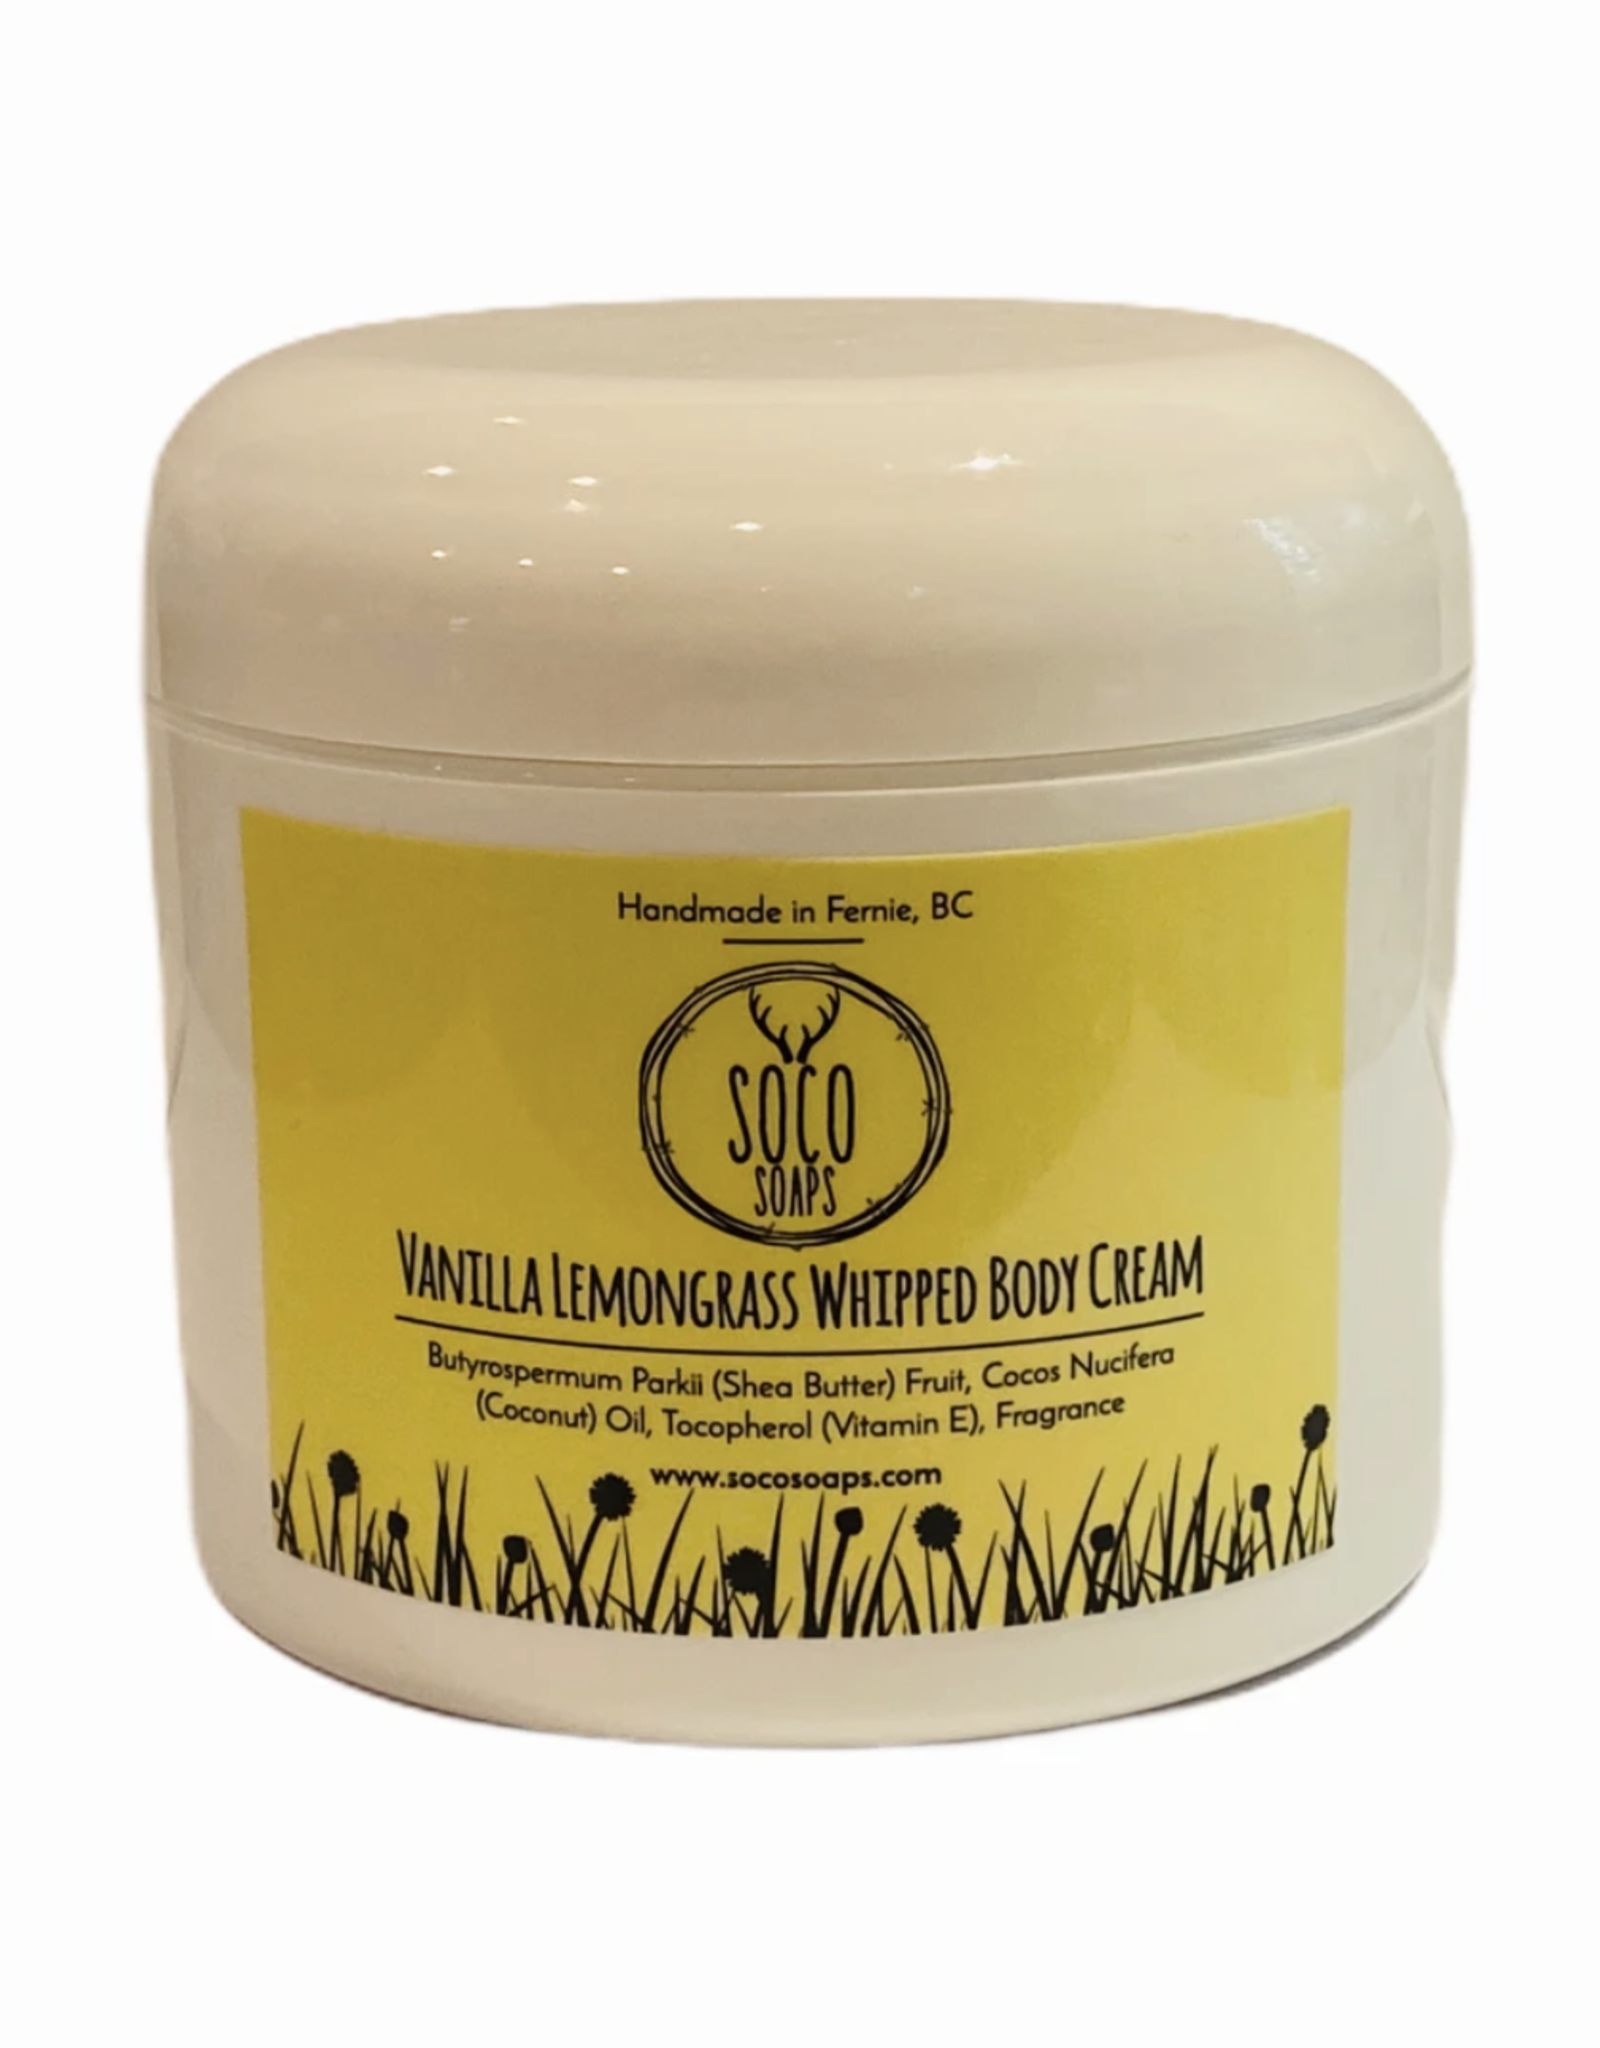 Vanilla Lemongrass Whipped Body Cream 4oz by Soco Soaps